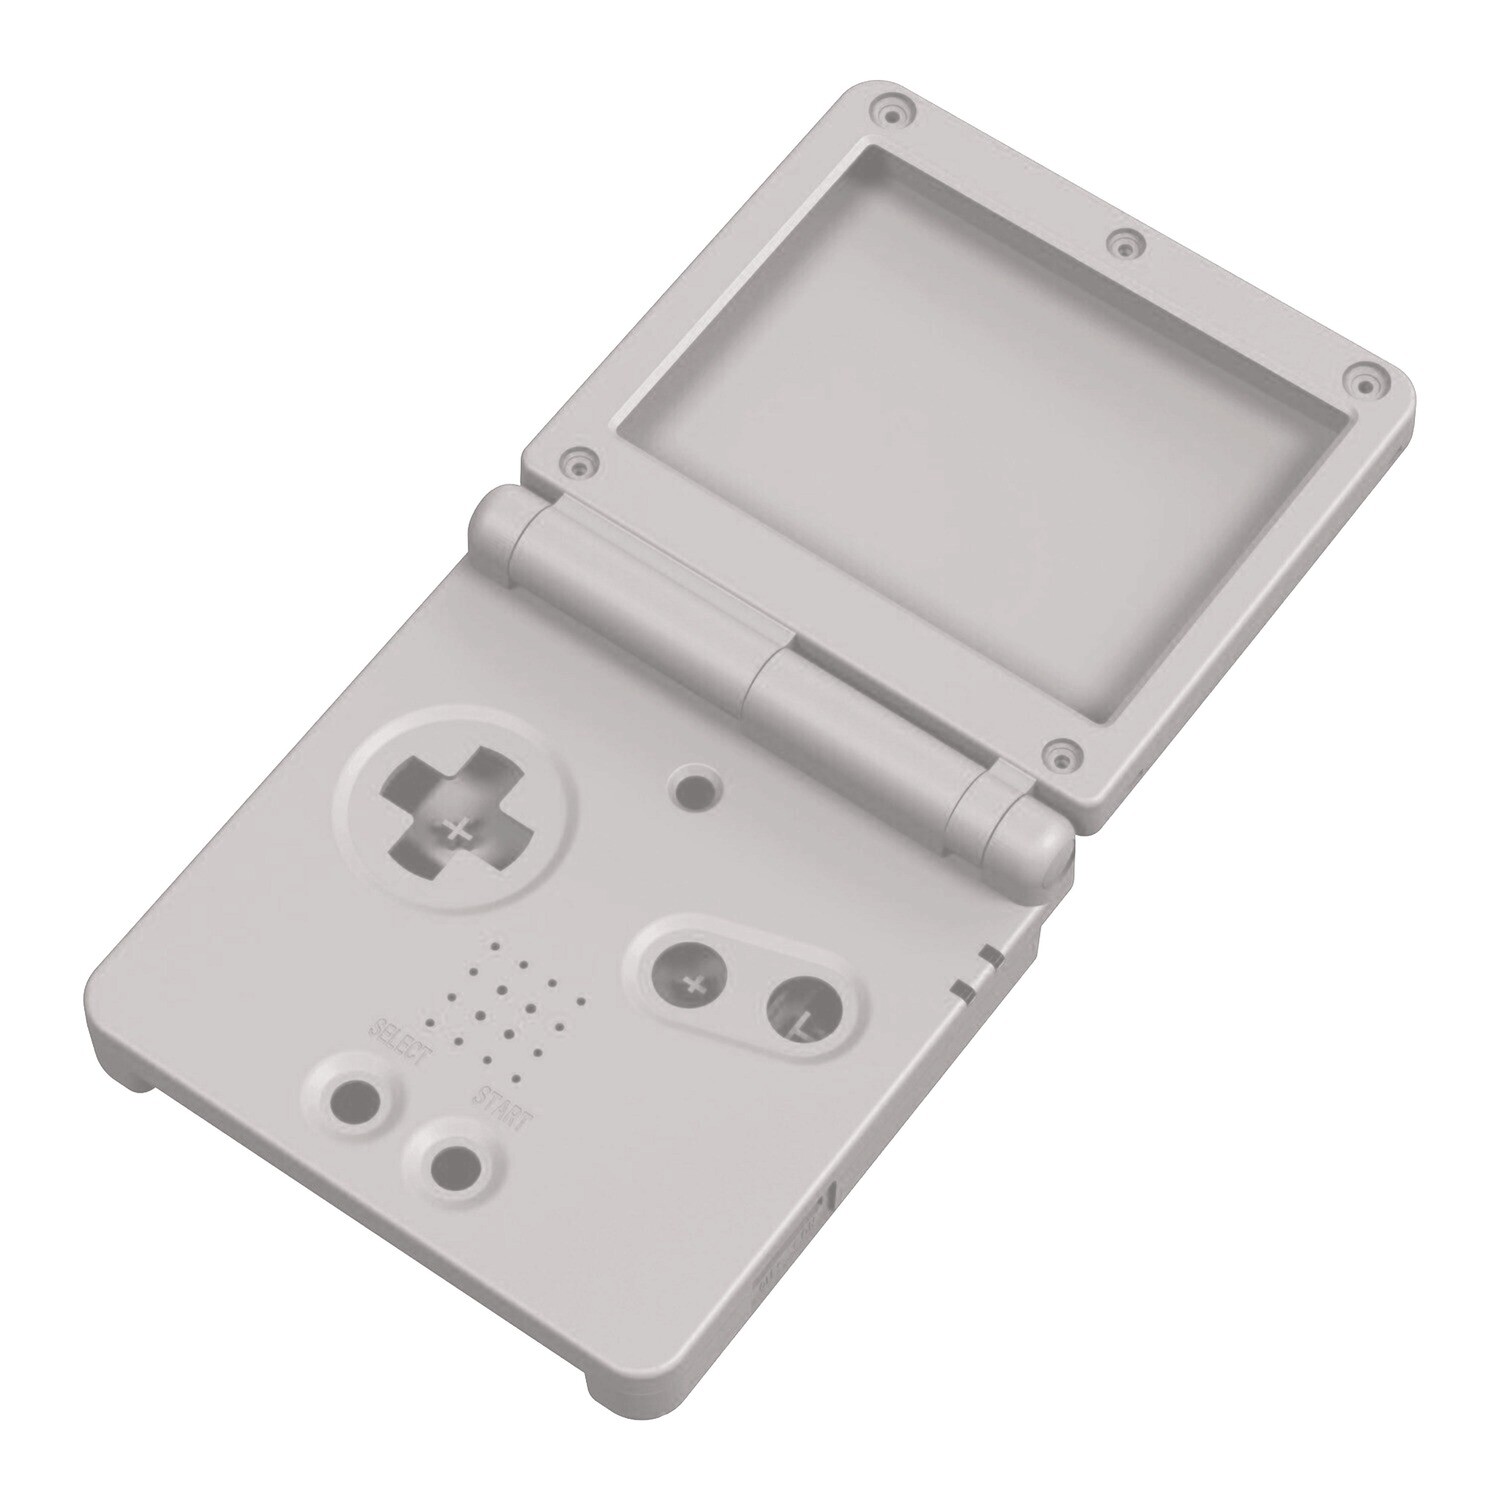 Game Boy Advance SP Shell (DMG Grey)